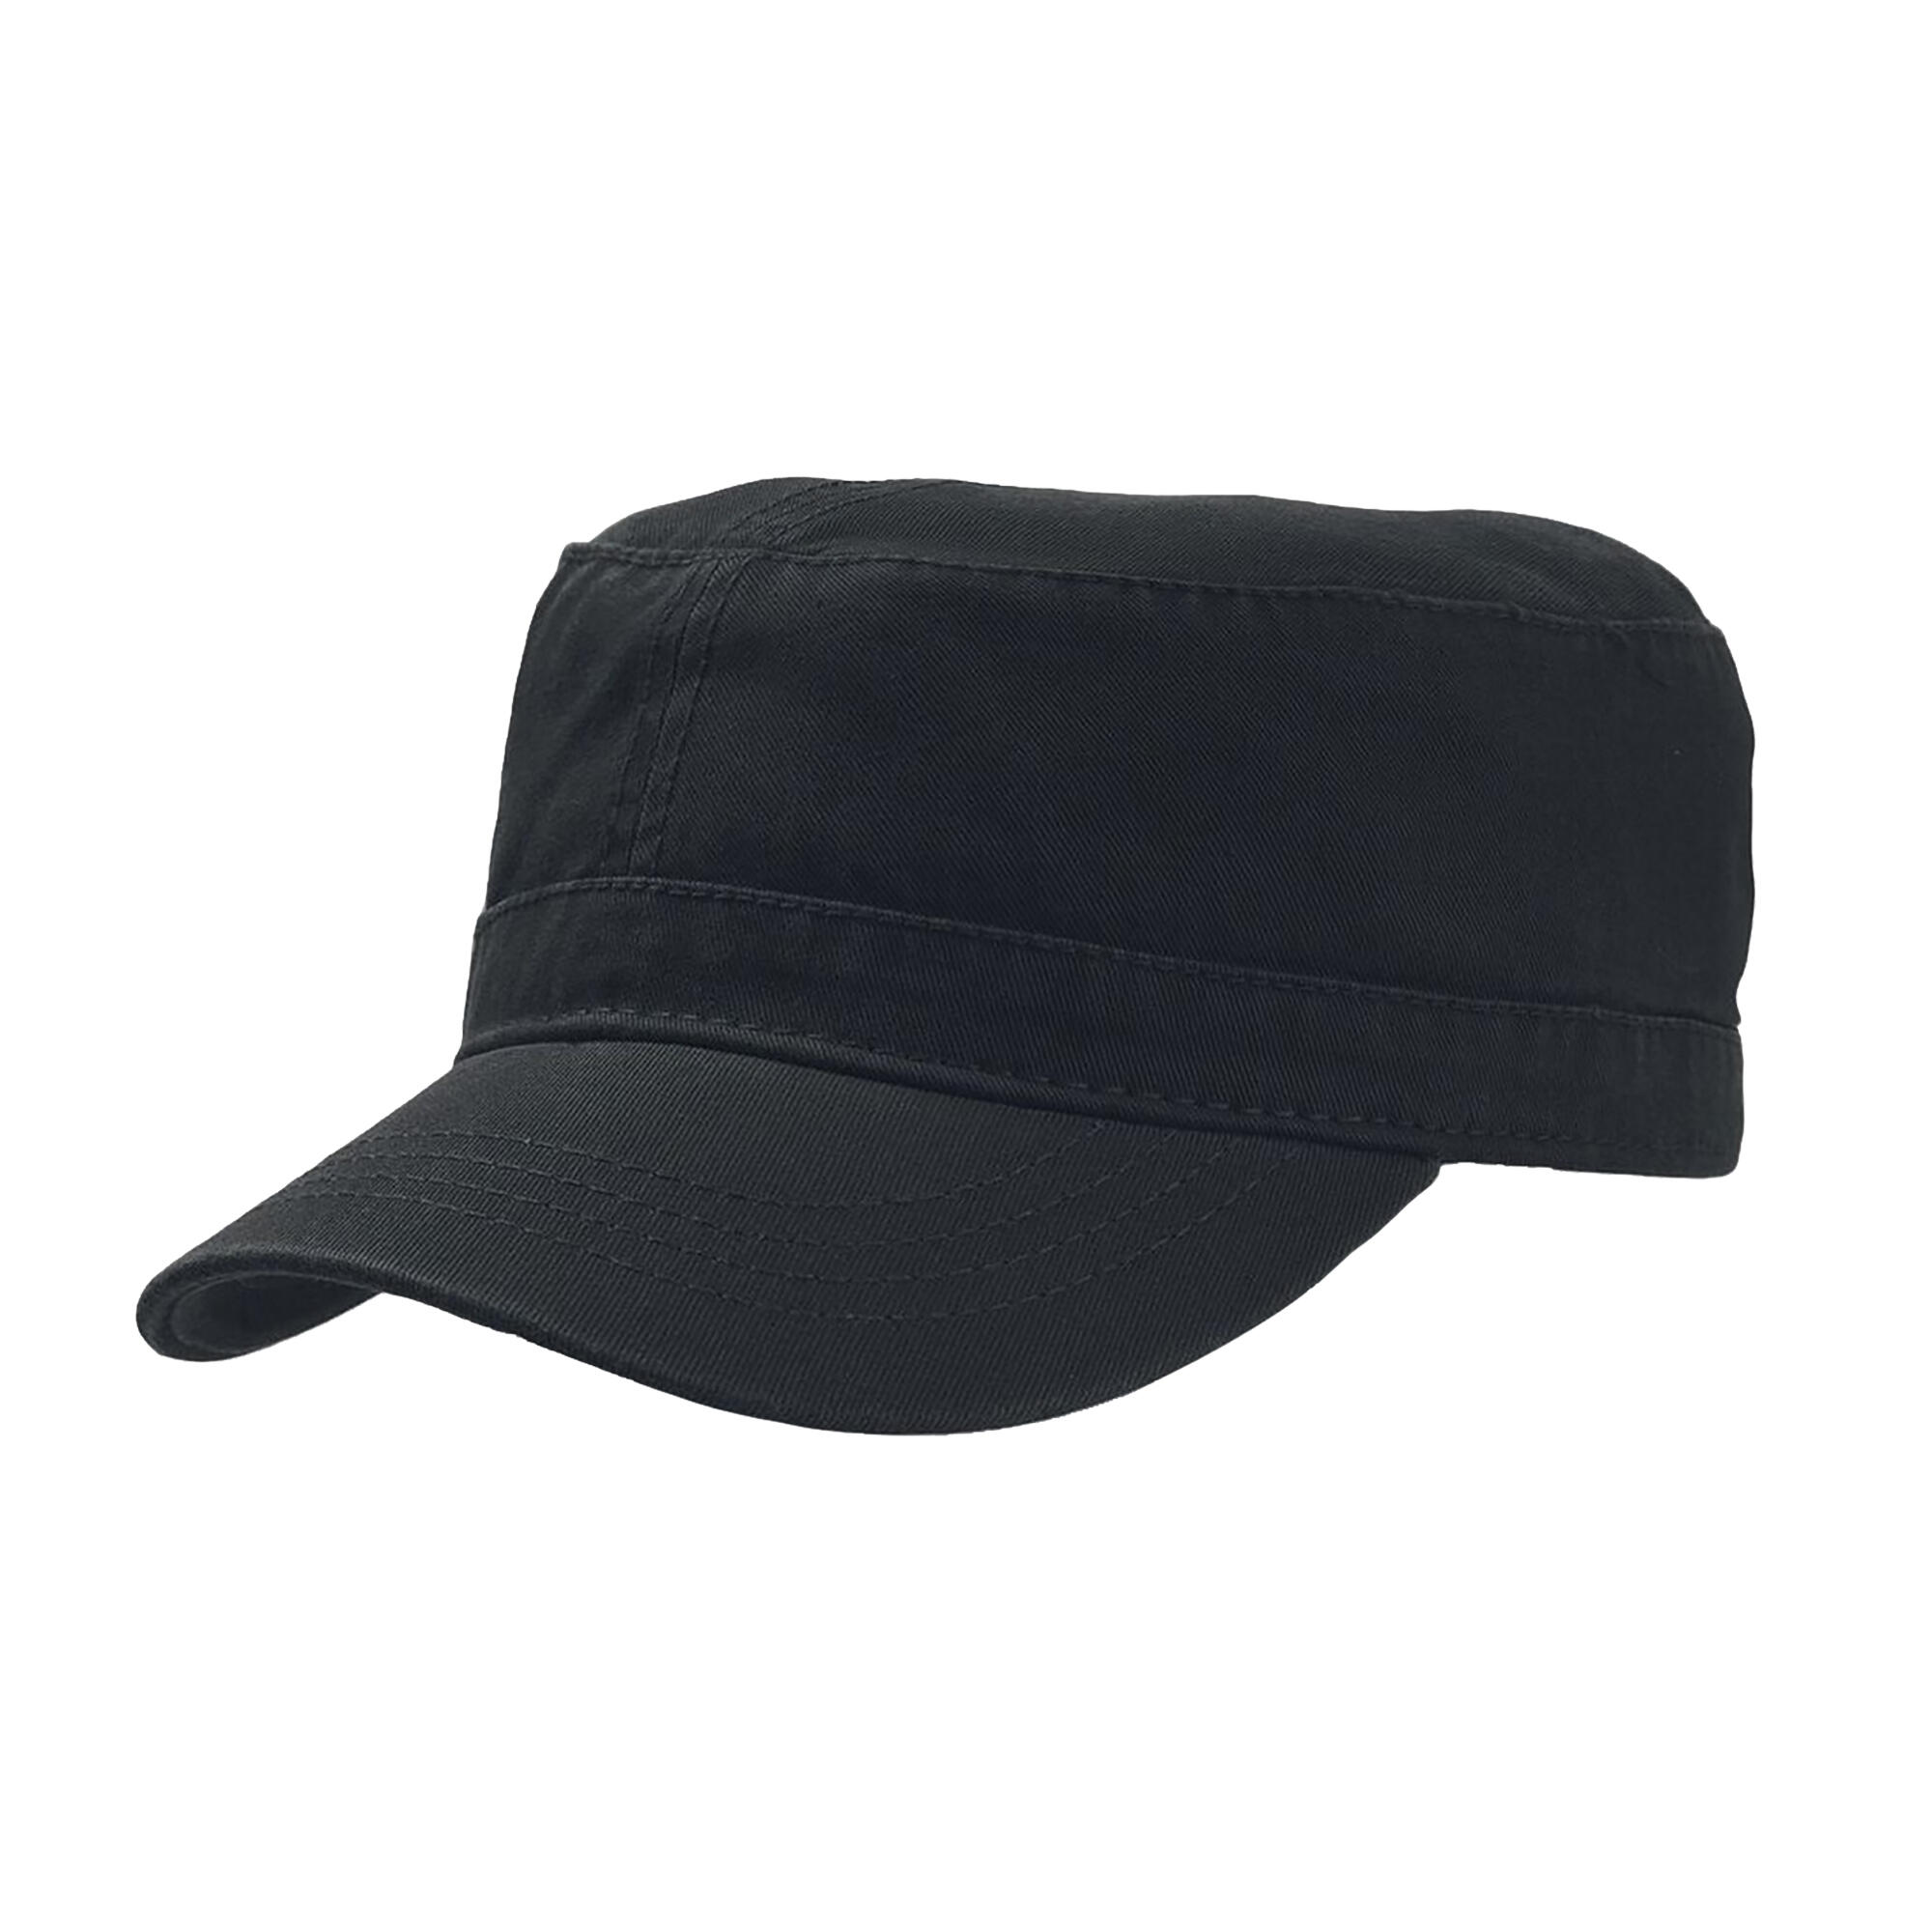 Chino Cotton Uniform Military Cap (Black) 1/5